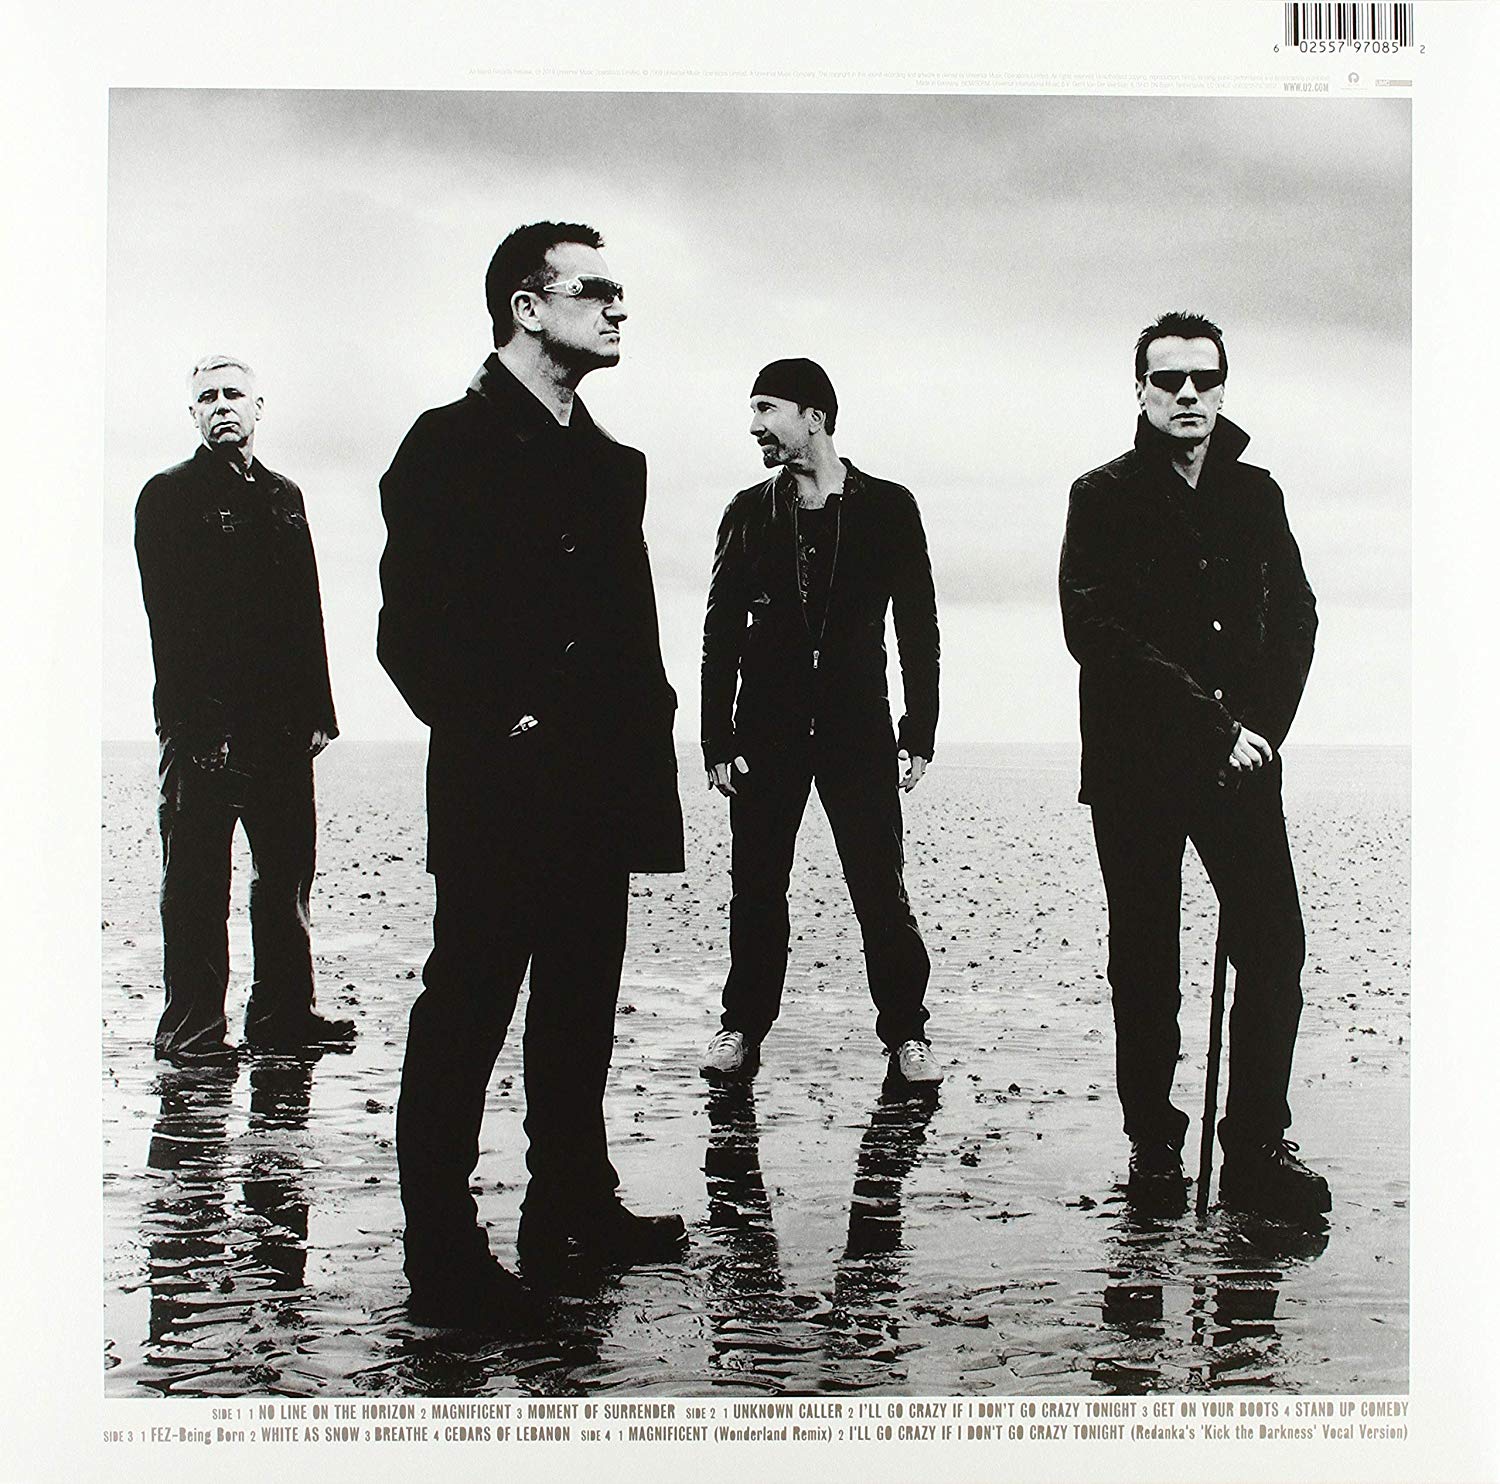 No line on the horizon - 10th Anniversary Edition - Vinyl | U2 image1